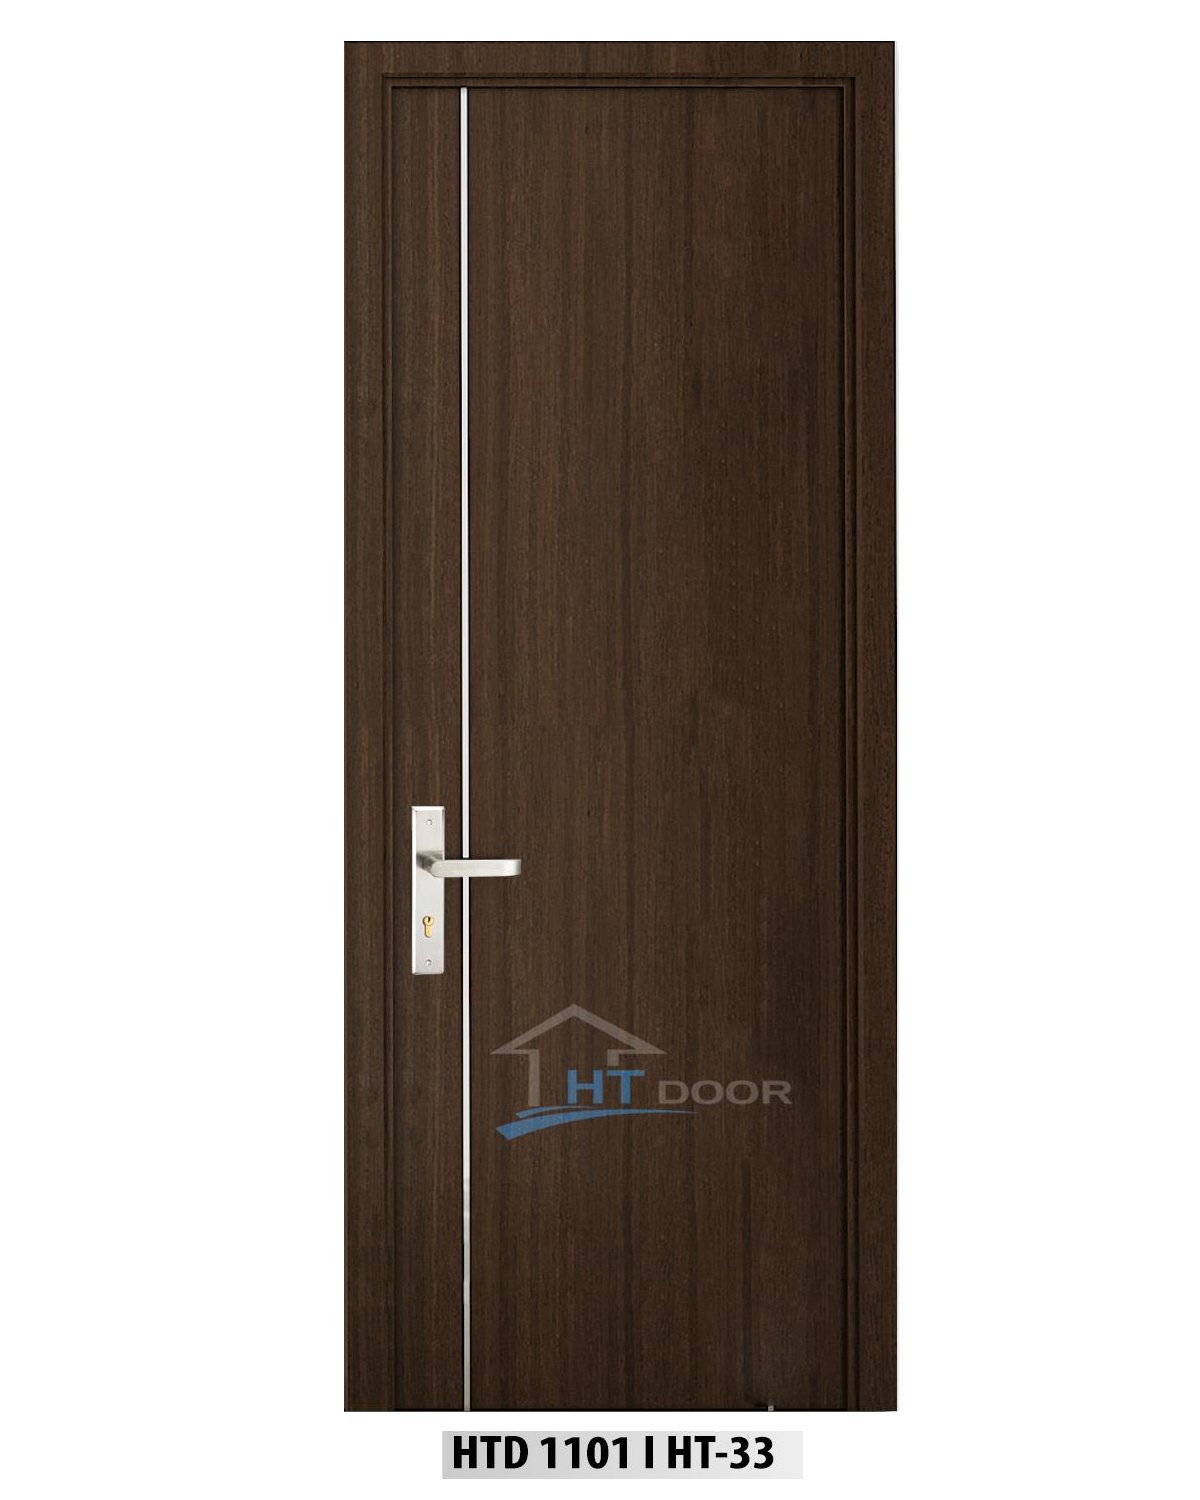 Mẫu cửa gỗ nhựa composite HTD 1101